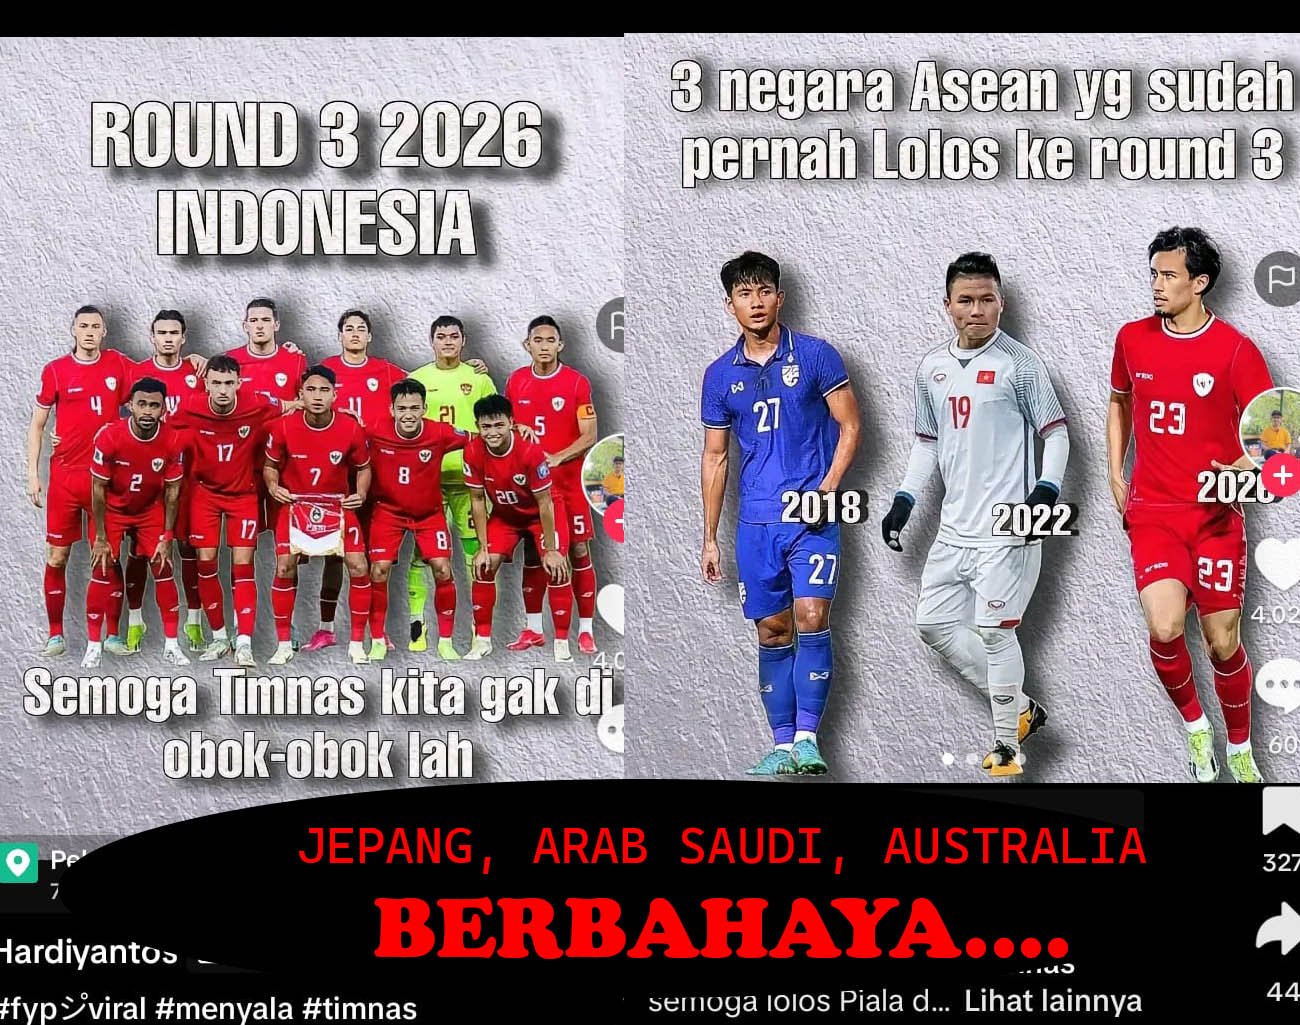 Jepang-Arab Saudi-Australia Berbahaya, Singkirkan Thailand-Vietnam, Indonesia Waspada, Kualifikasi Piala Dunia